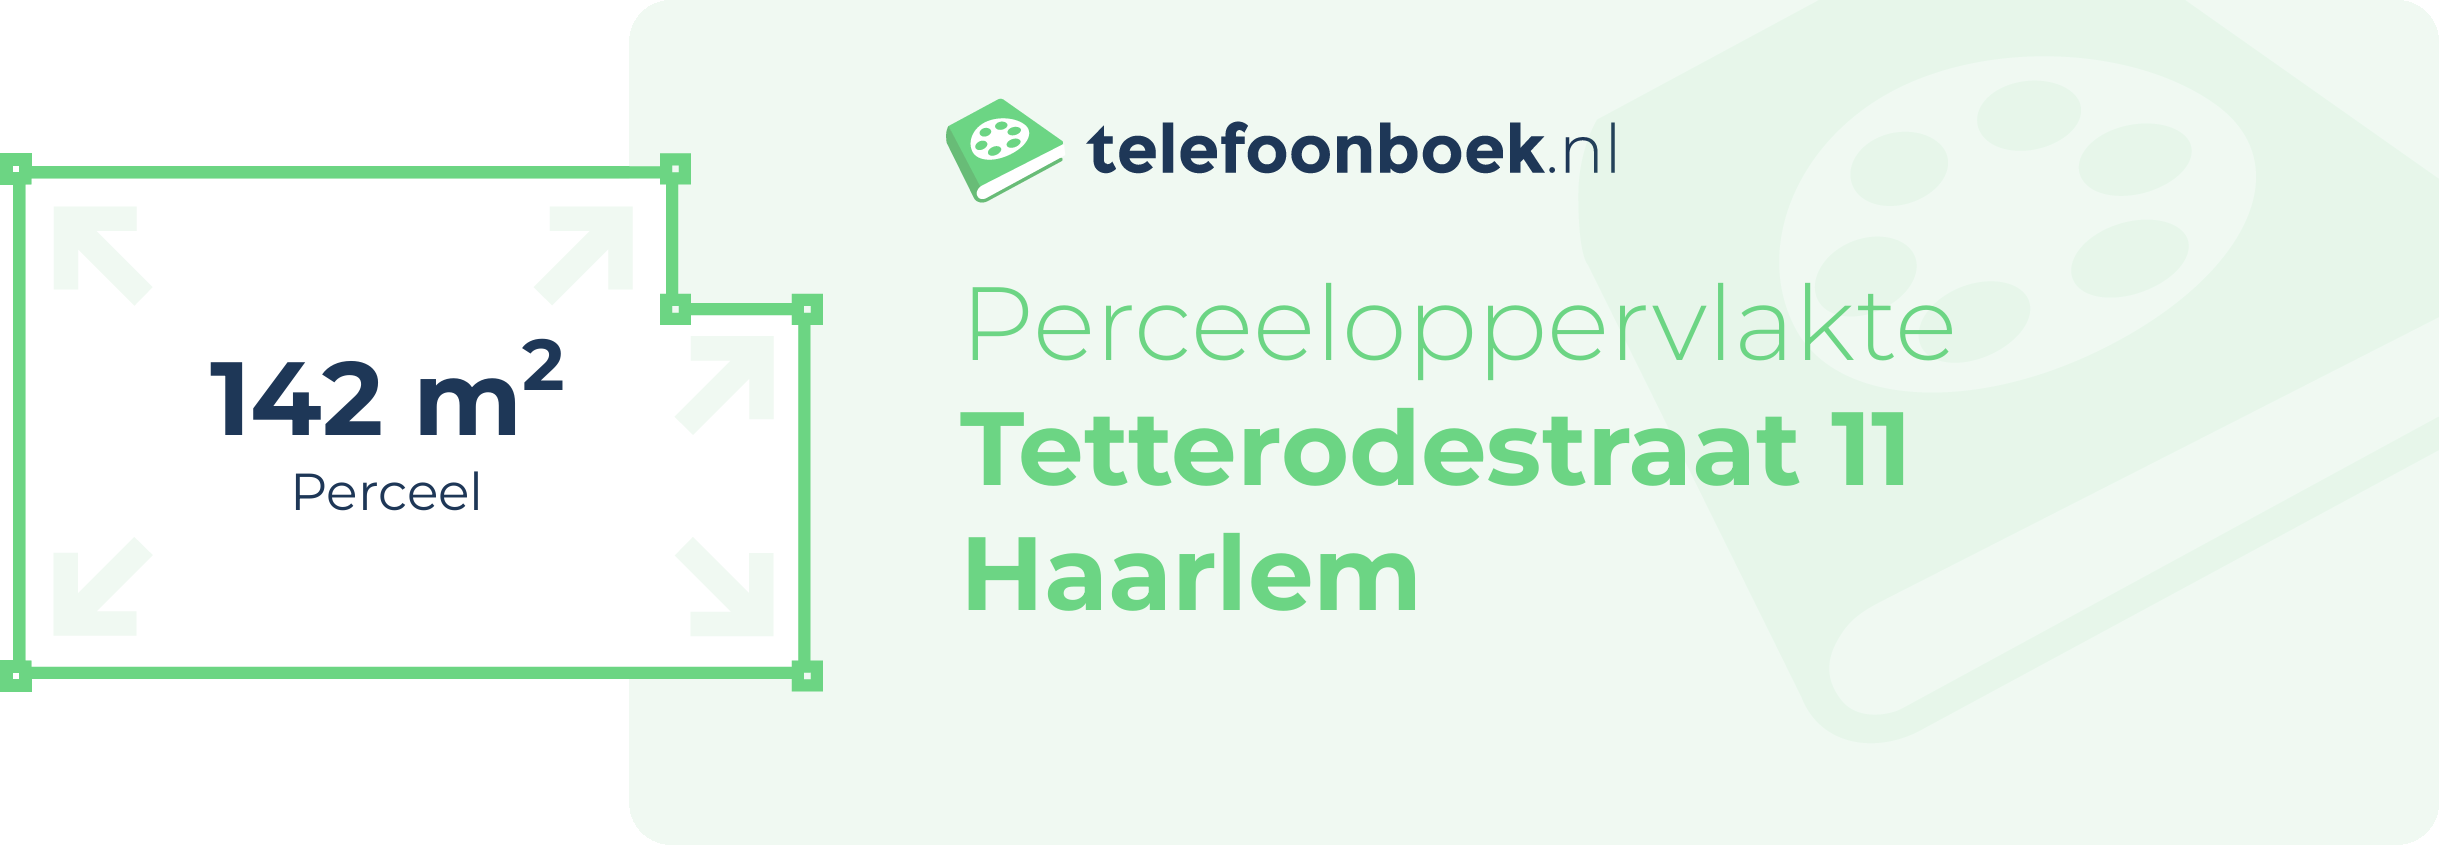 Perceeloppervlakte Tetterodestraat 11 Haarlem